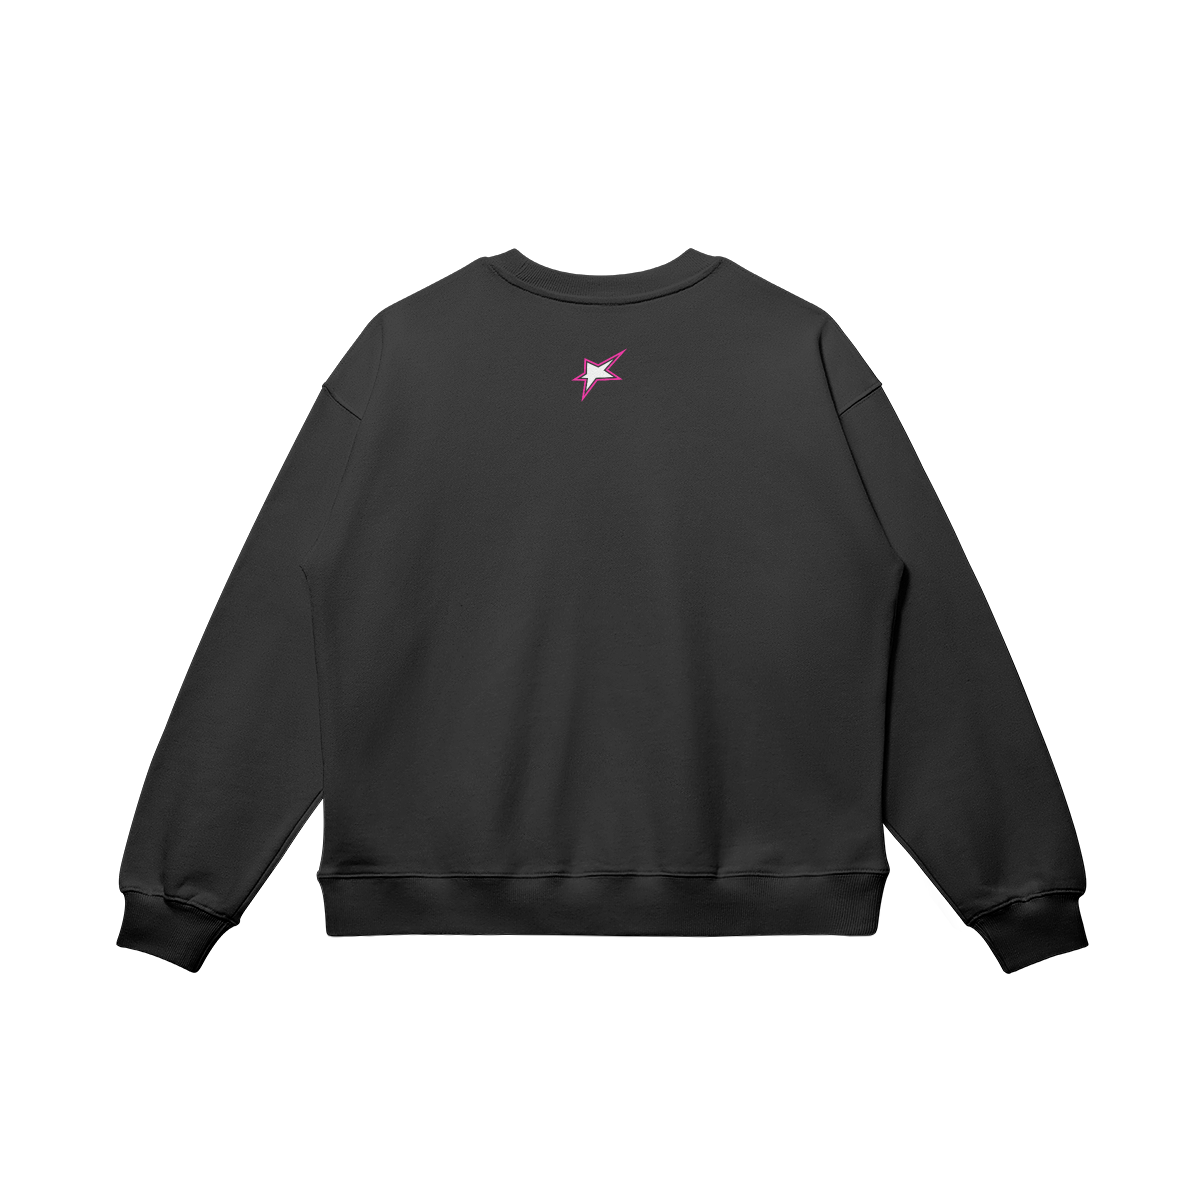 Landon West® Graphic Sweatshirt